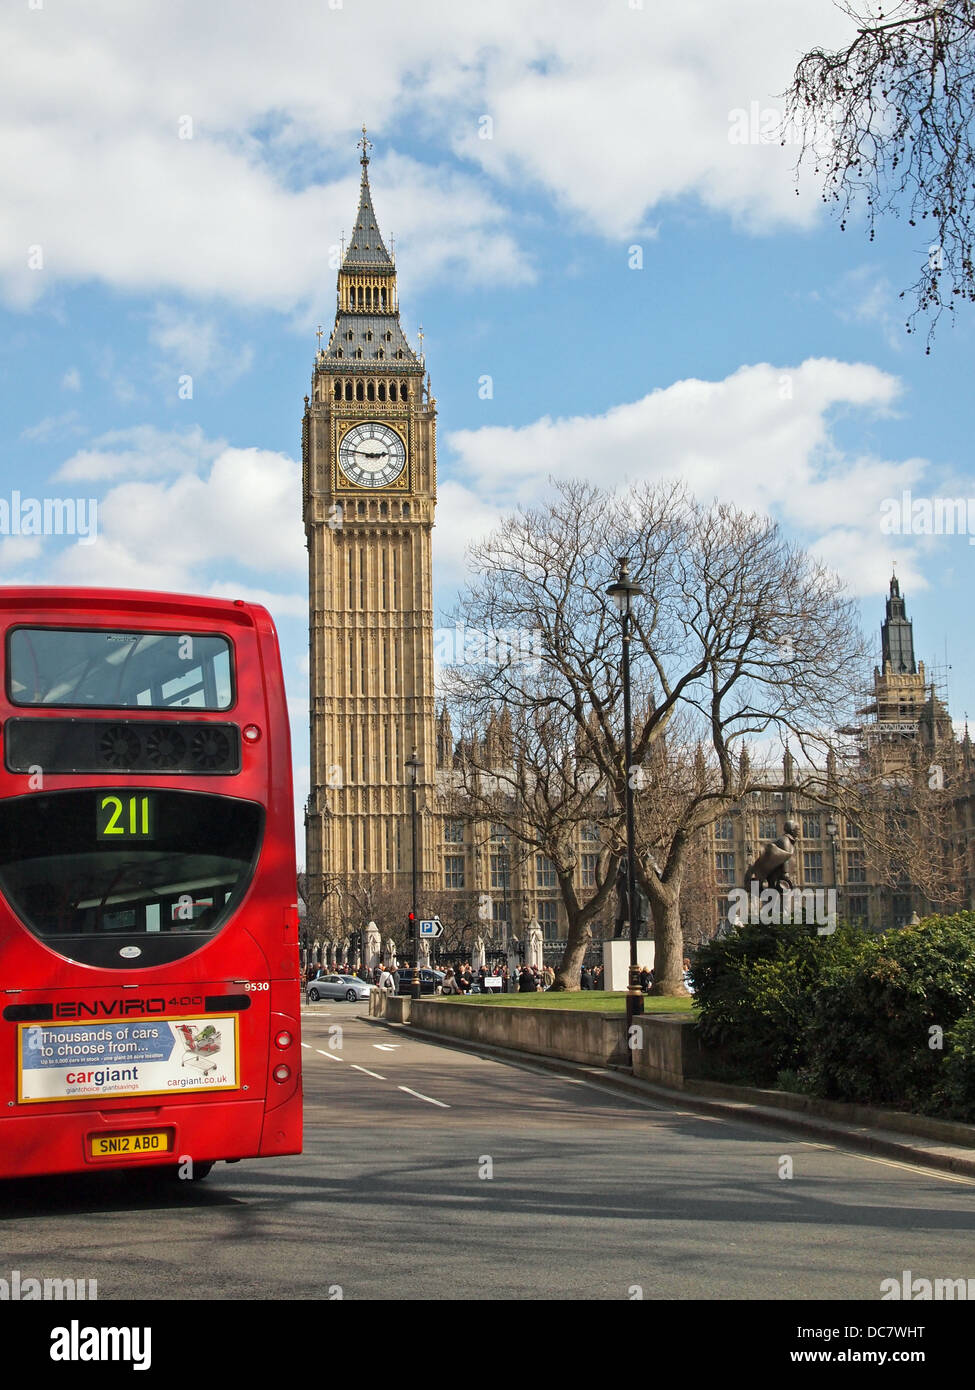 London Schneekugel XL Tower Bridge Big Ben Westminster Eye Bus ...